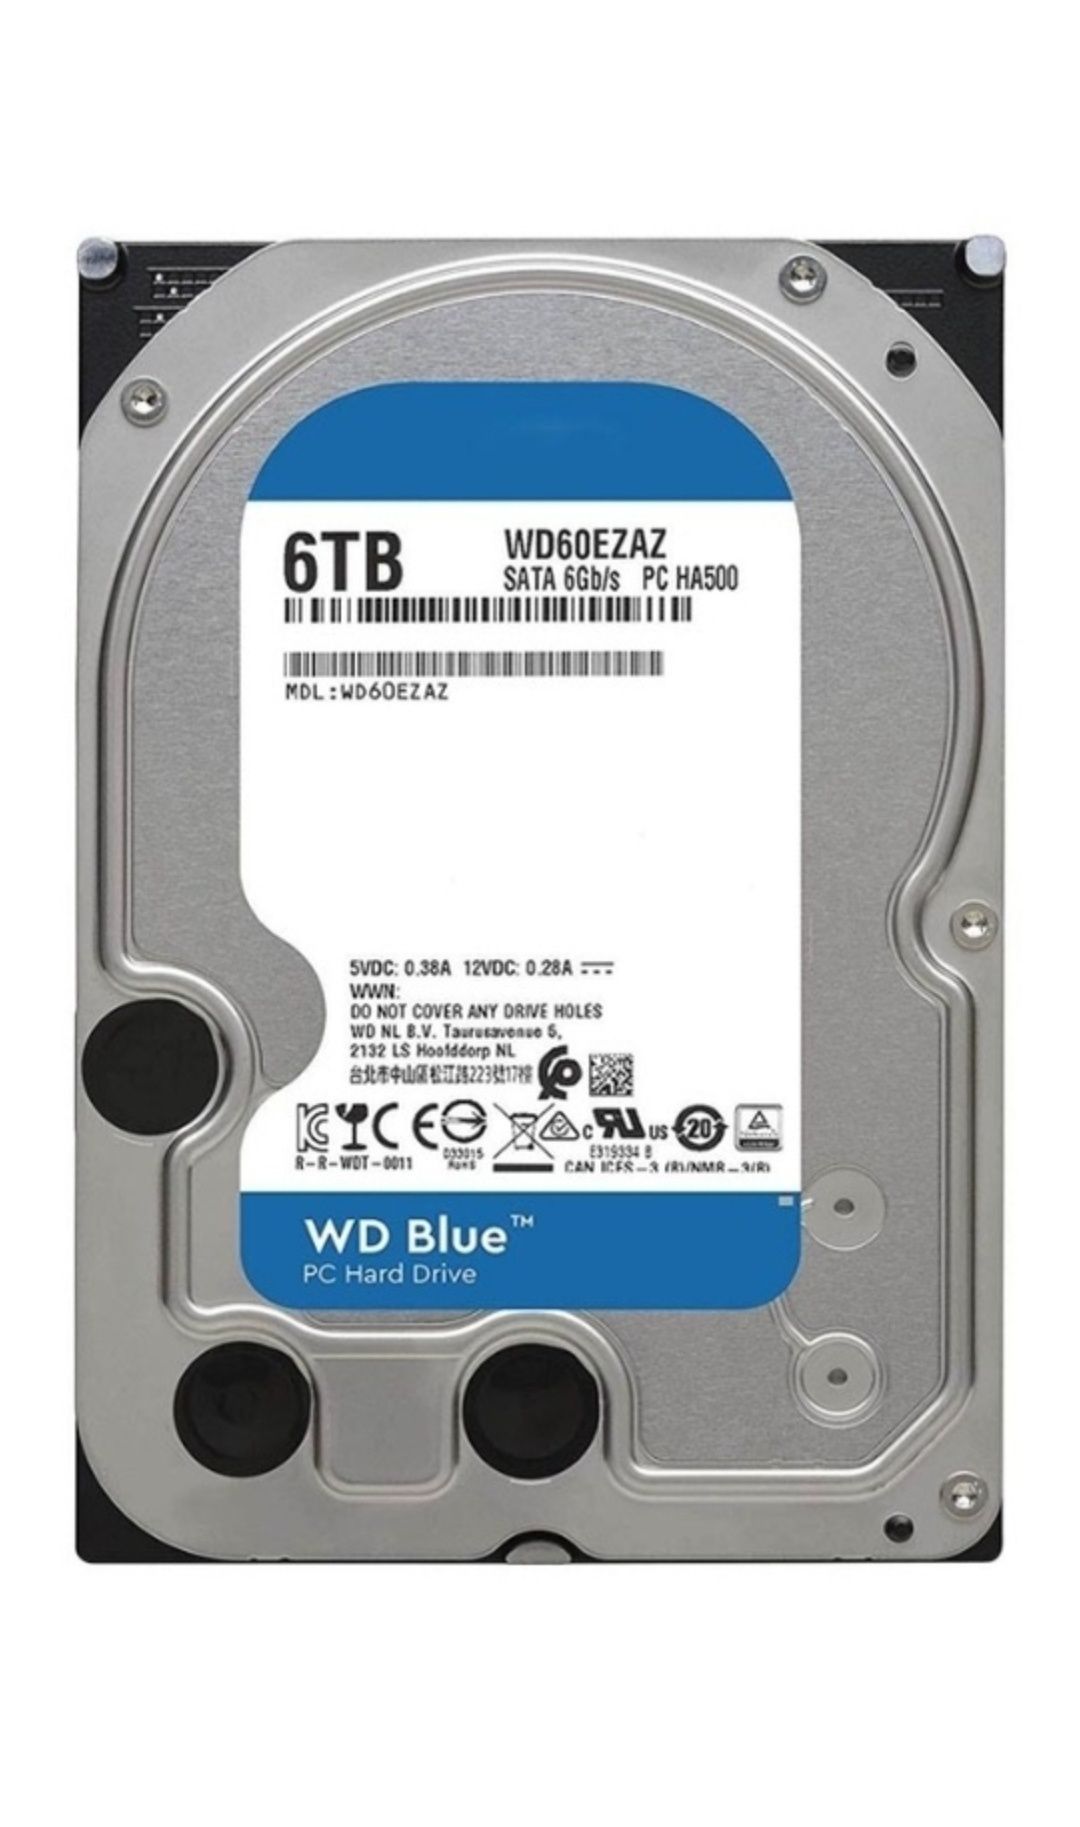 Western Digital WD60EZAZ 6TB жесткие диски